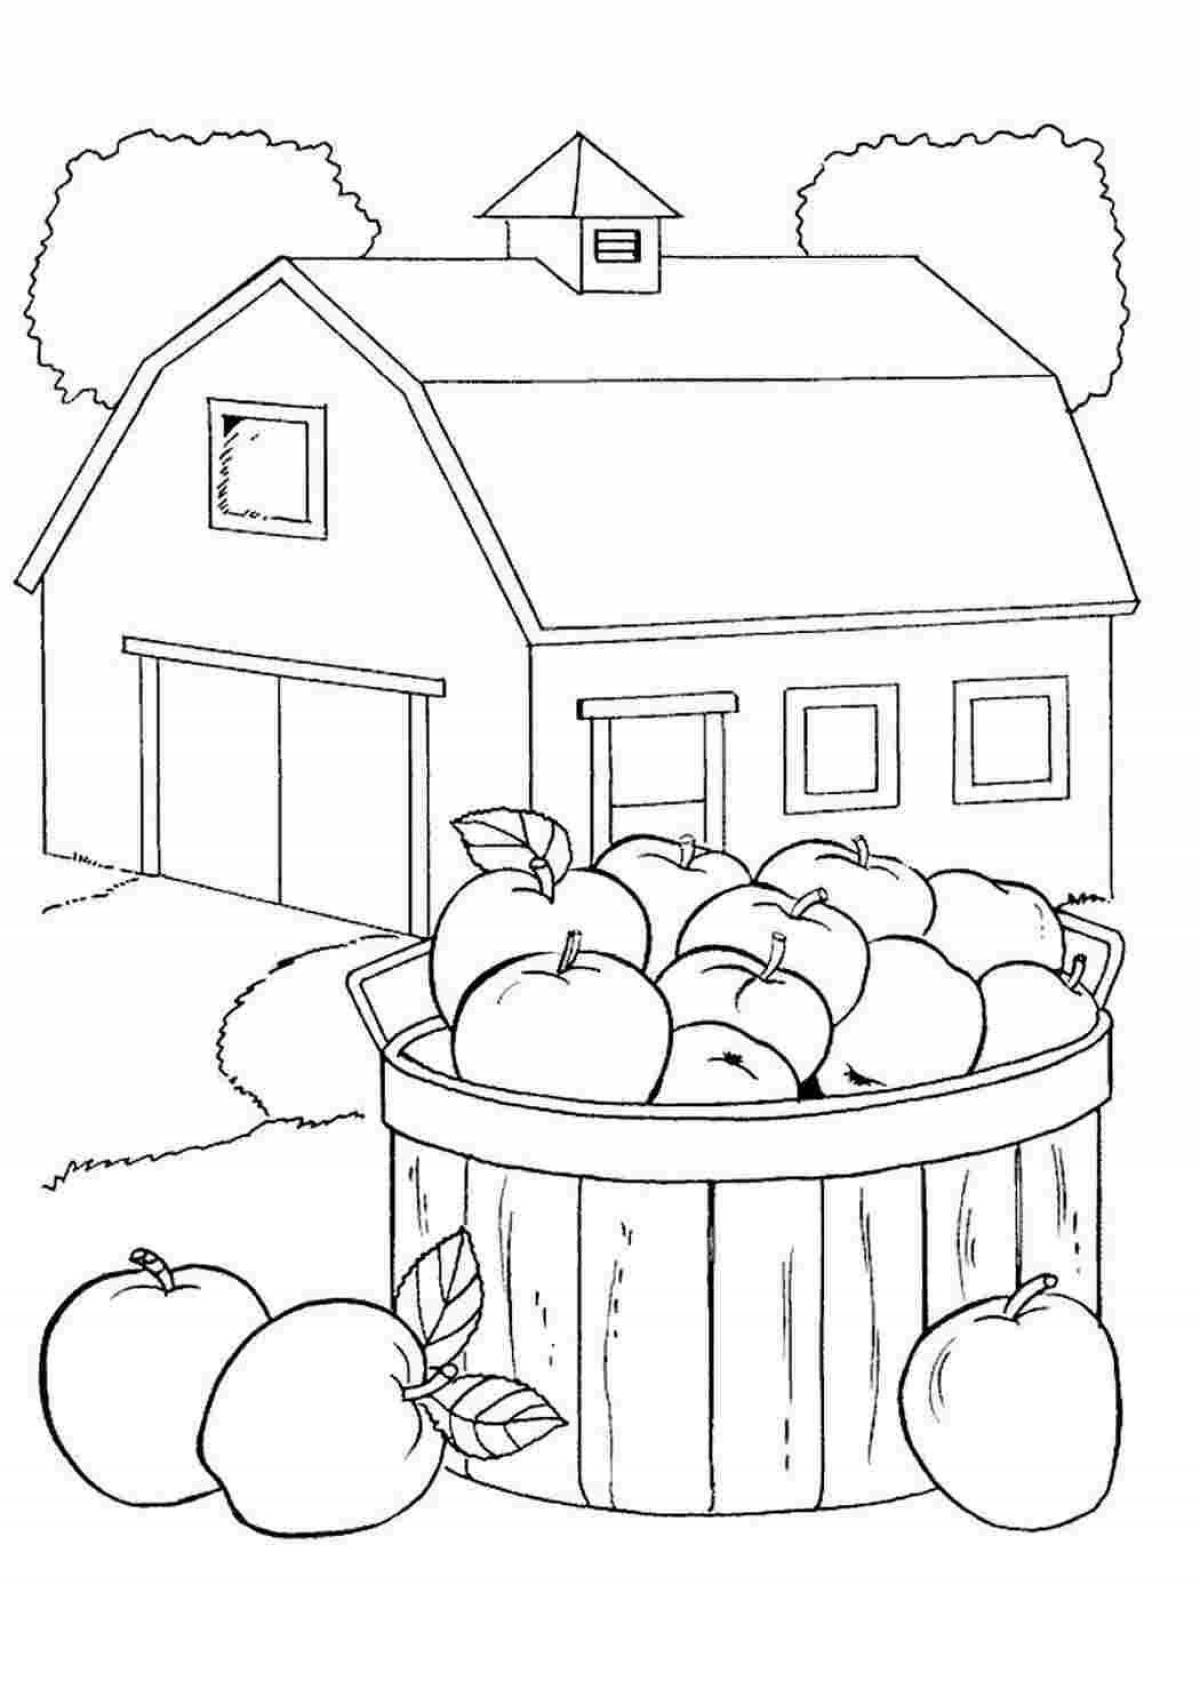 Fabulous village house coloring page